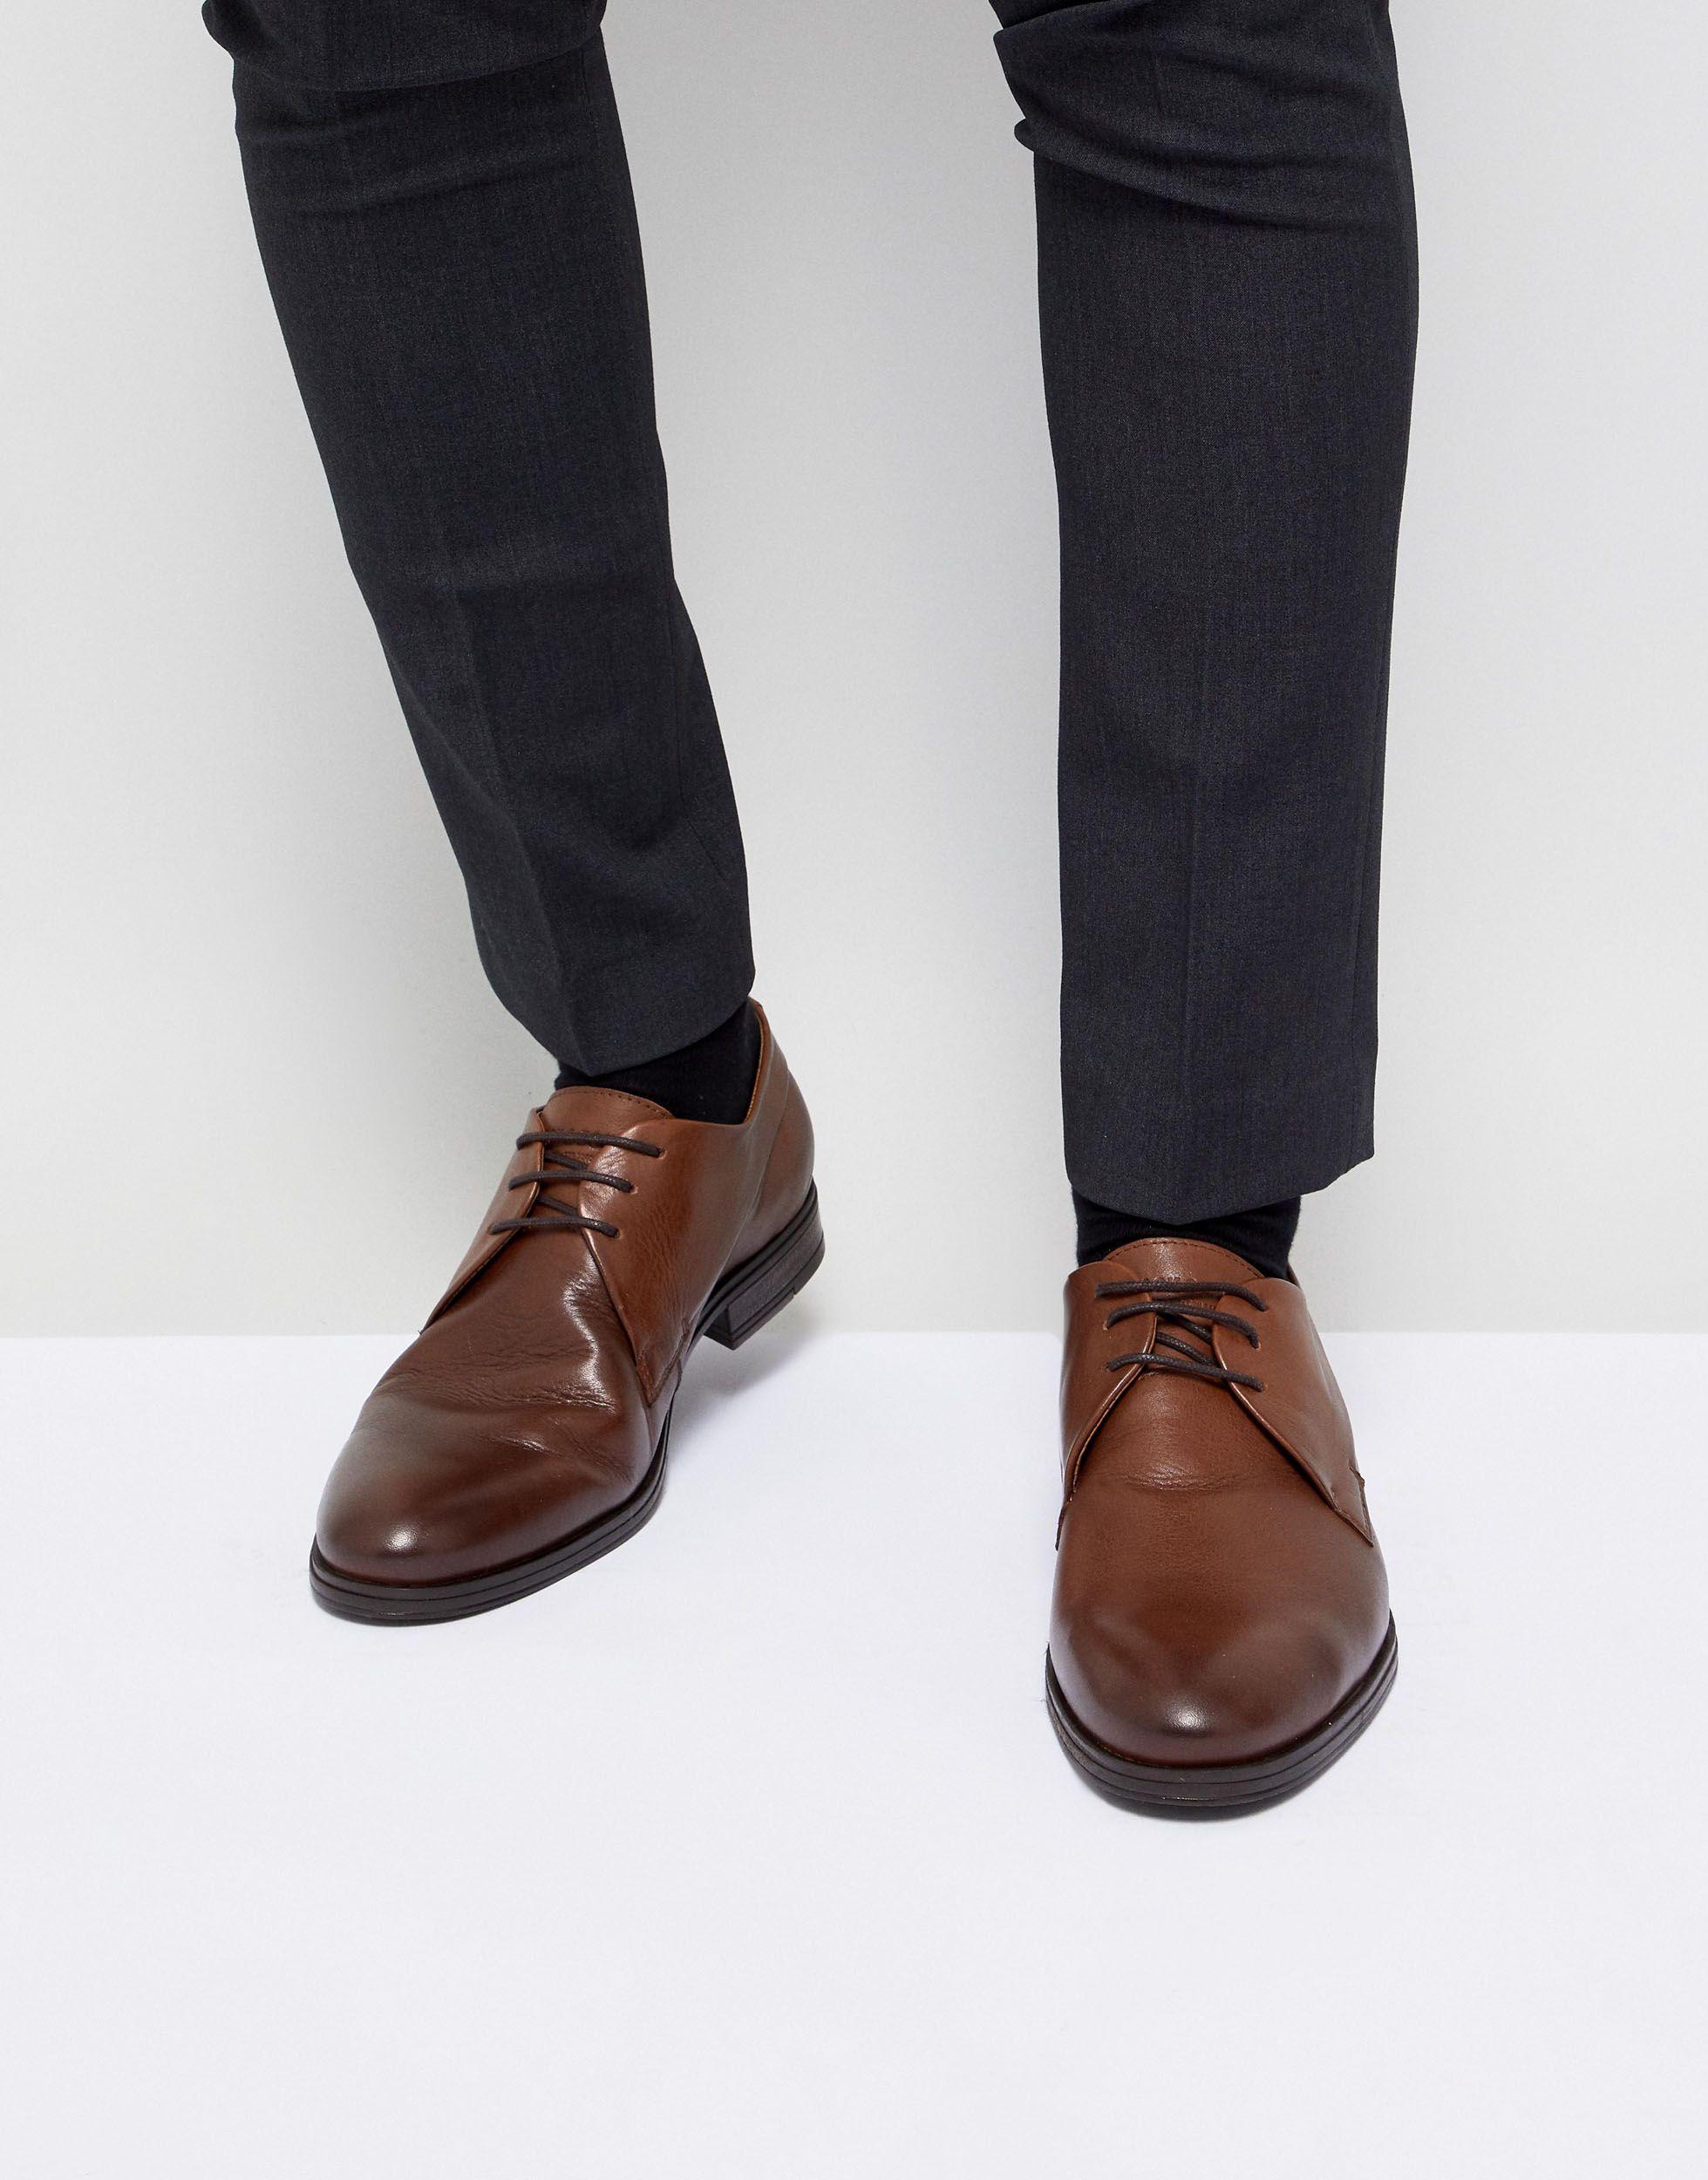 Jack & Jones Premium Leather Derby Shoes in Brown for Men - Lyst